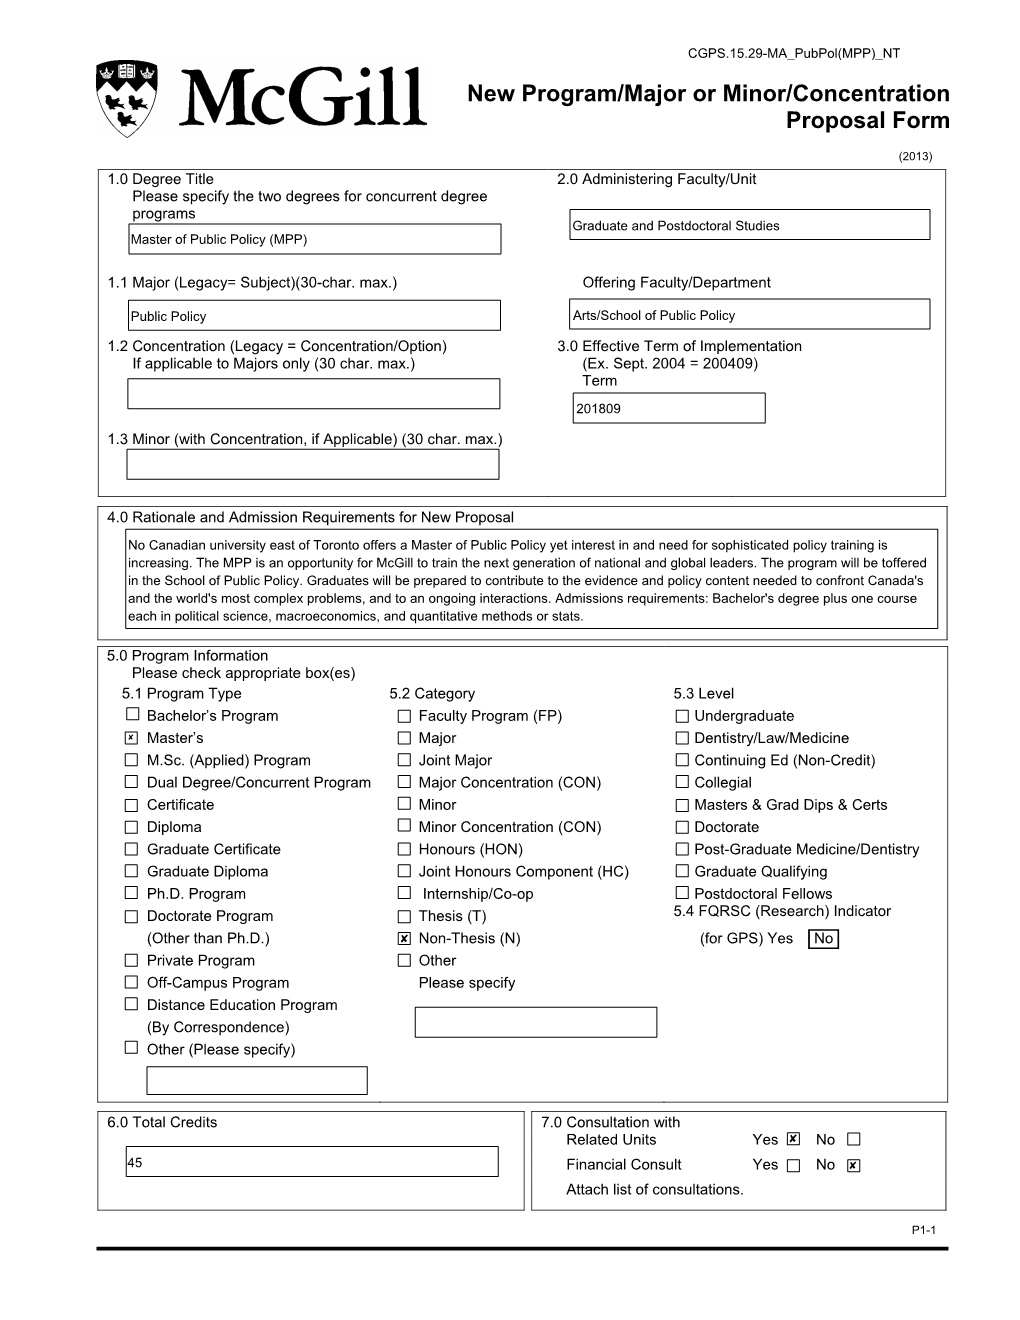 New Program/Major Or Minor/Concentration Proposal Form